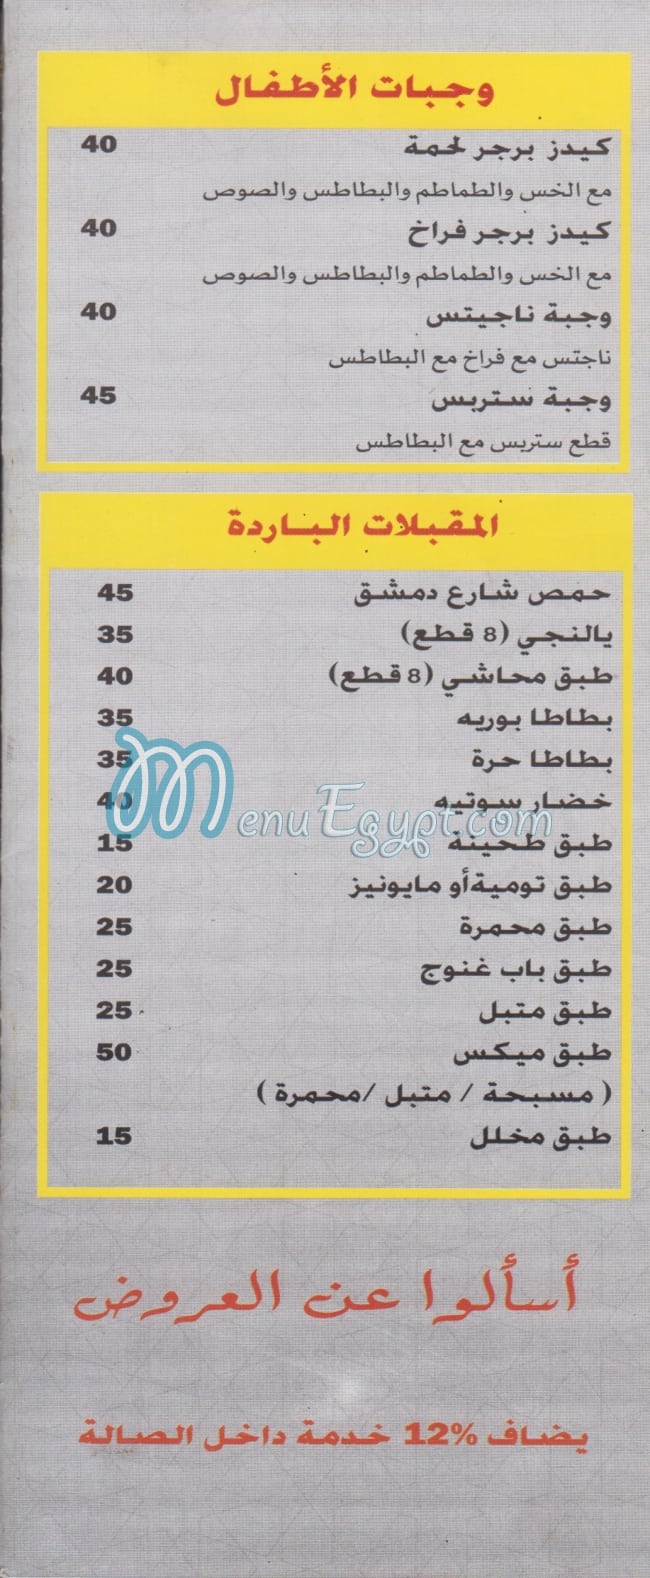 Share3 Demsheq menu Egypt